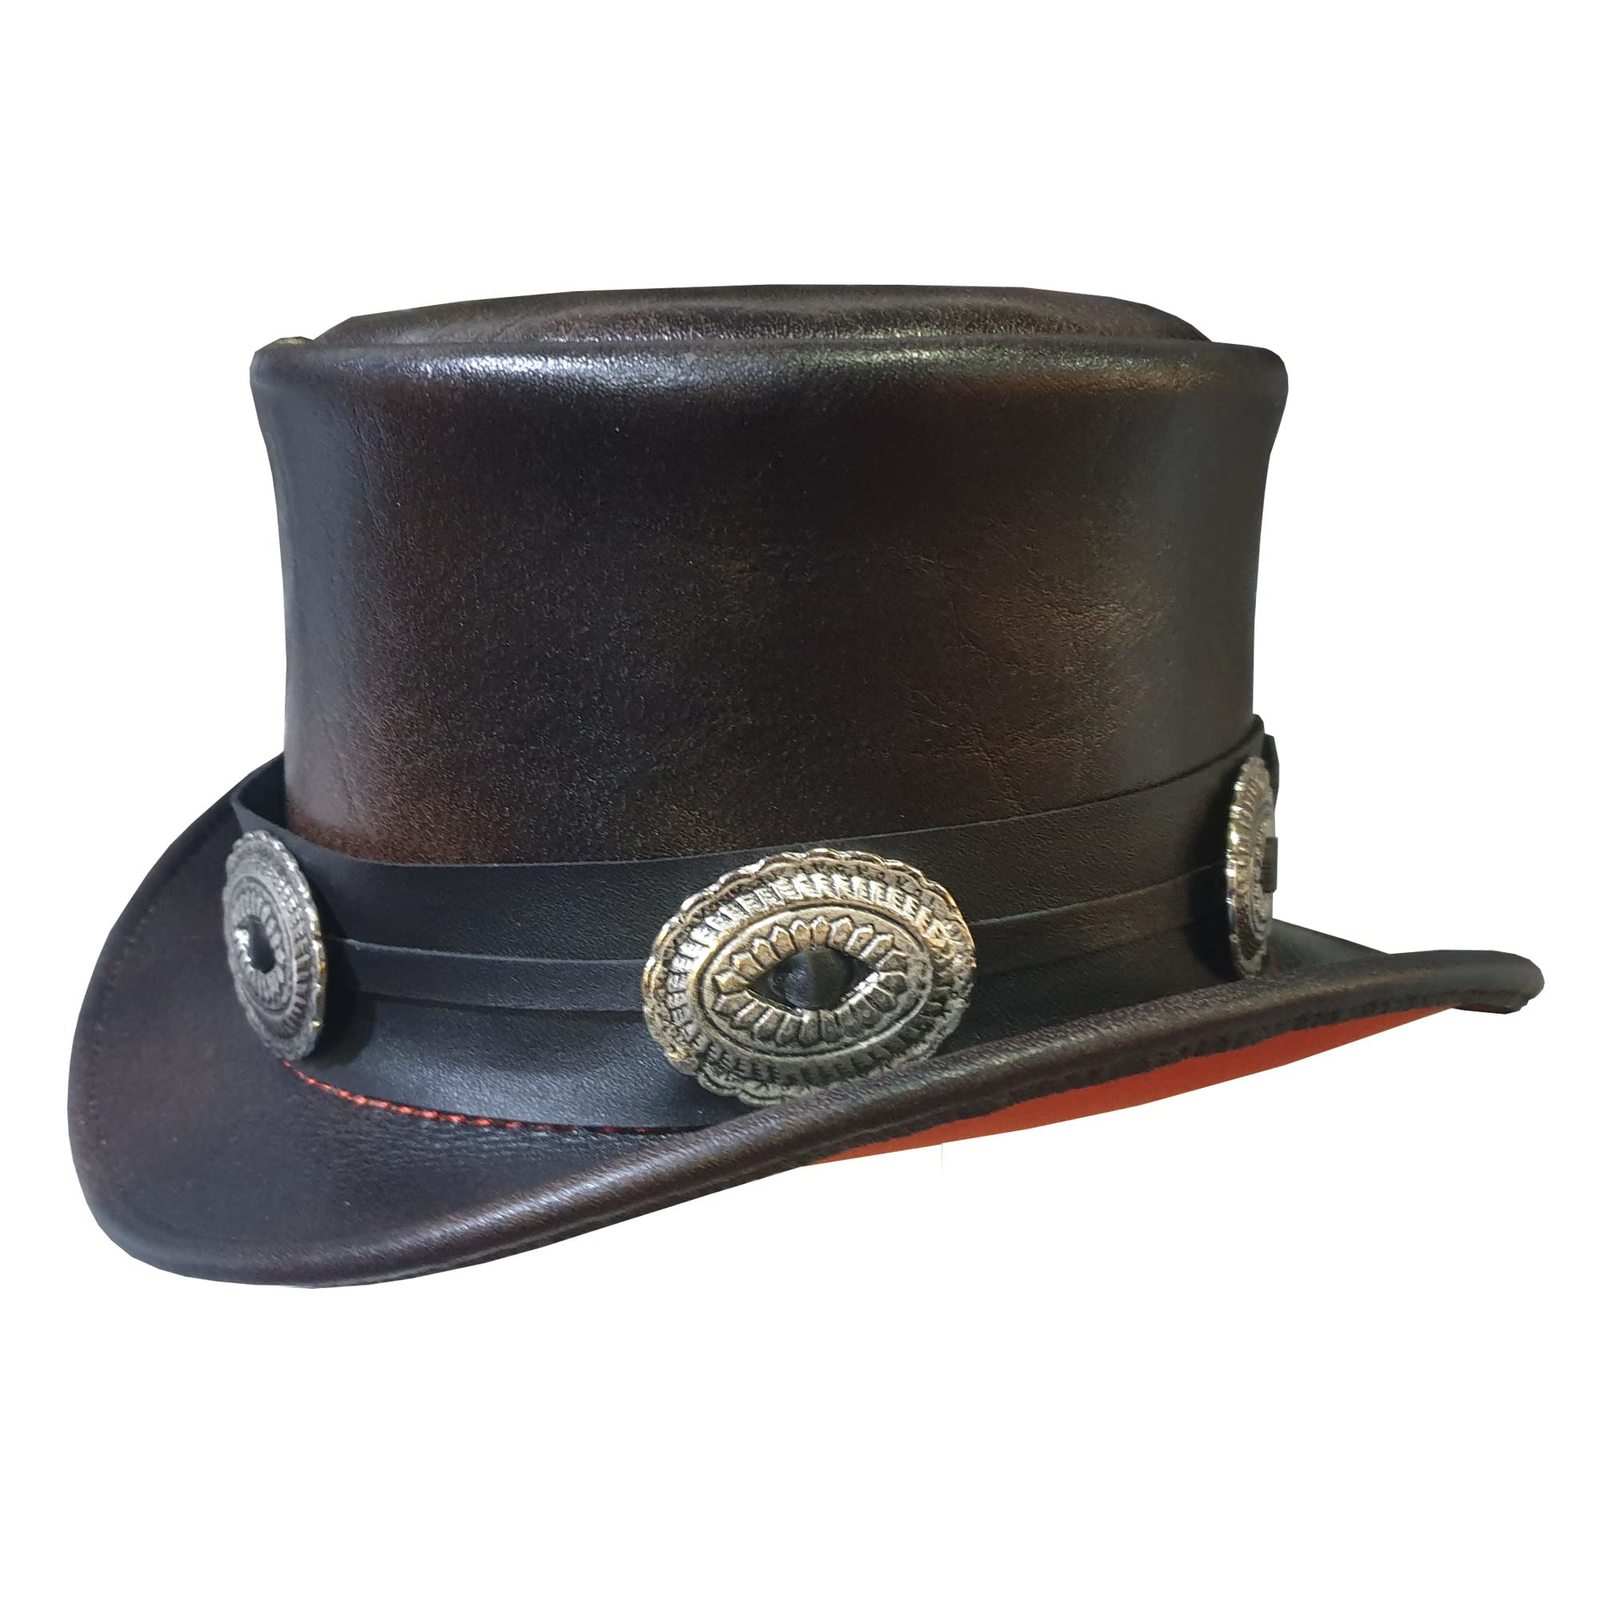 Slash Tribute Leather Top Hat - $299.00